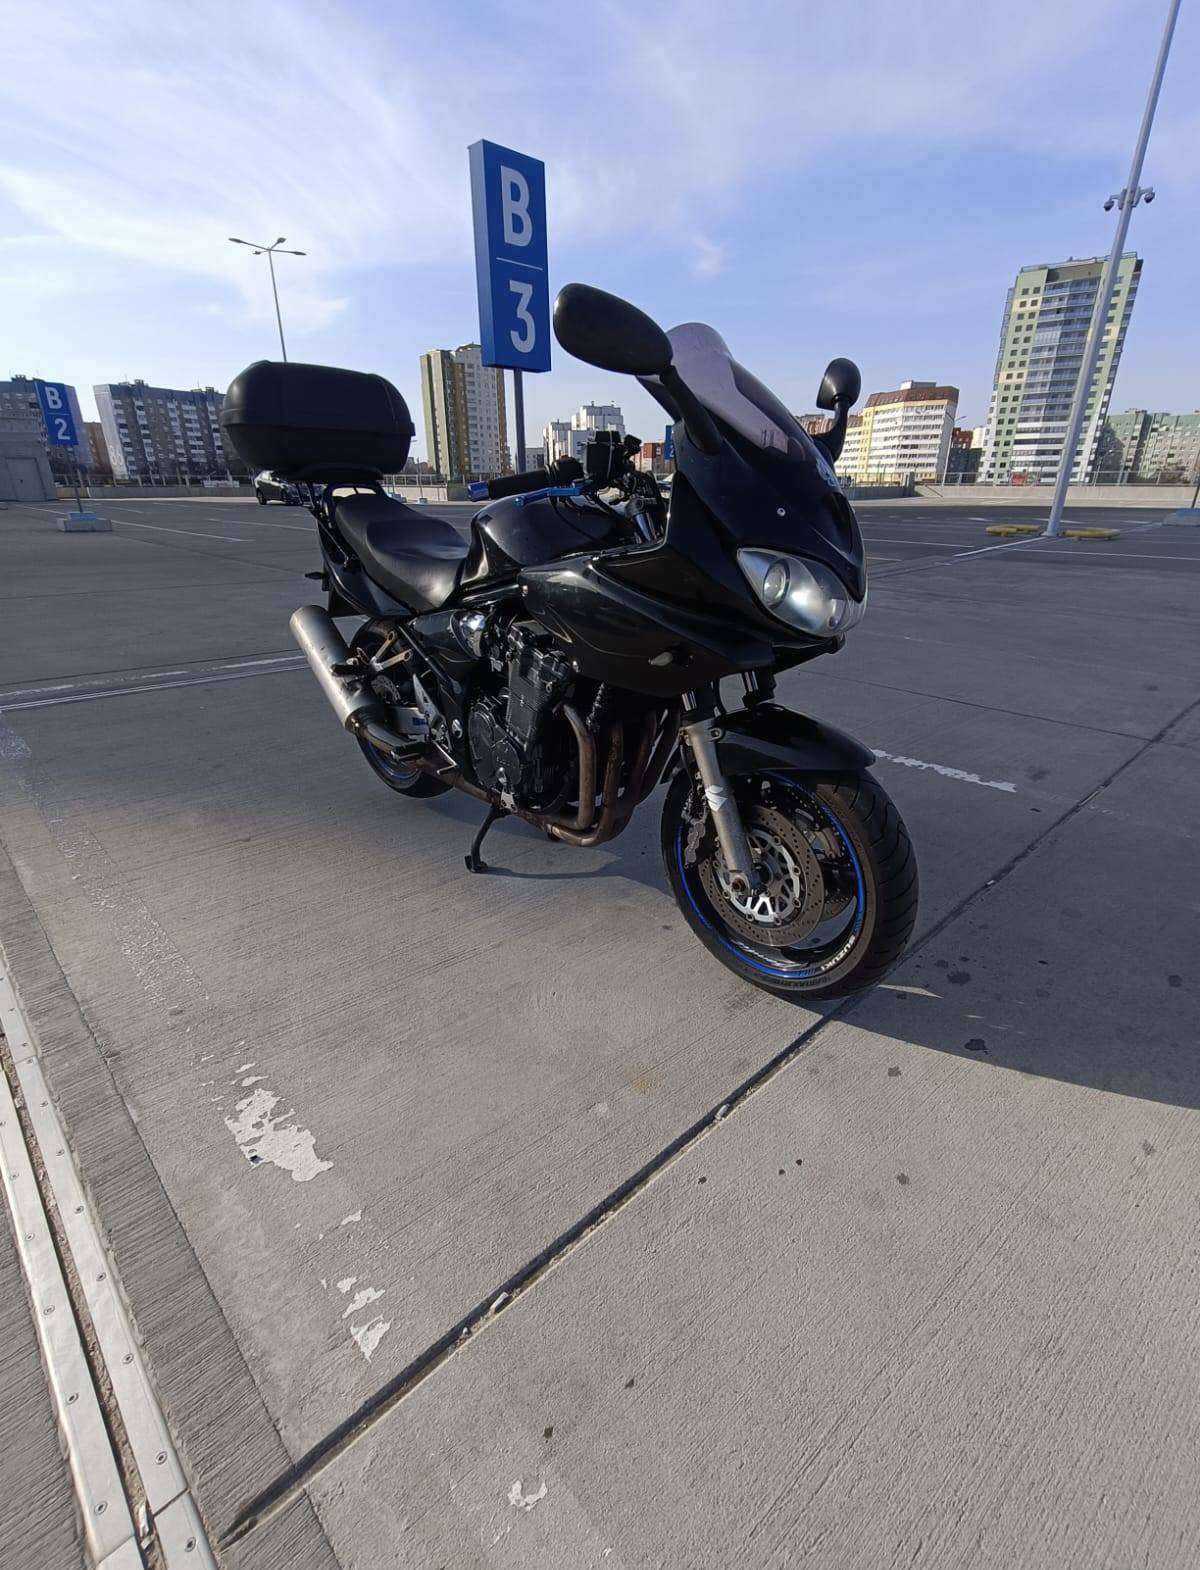 Купить мотоцикл Suzuki Bandit в Беларуси в кредит - цены, характеристики, фото. в Беларуси в кредит